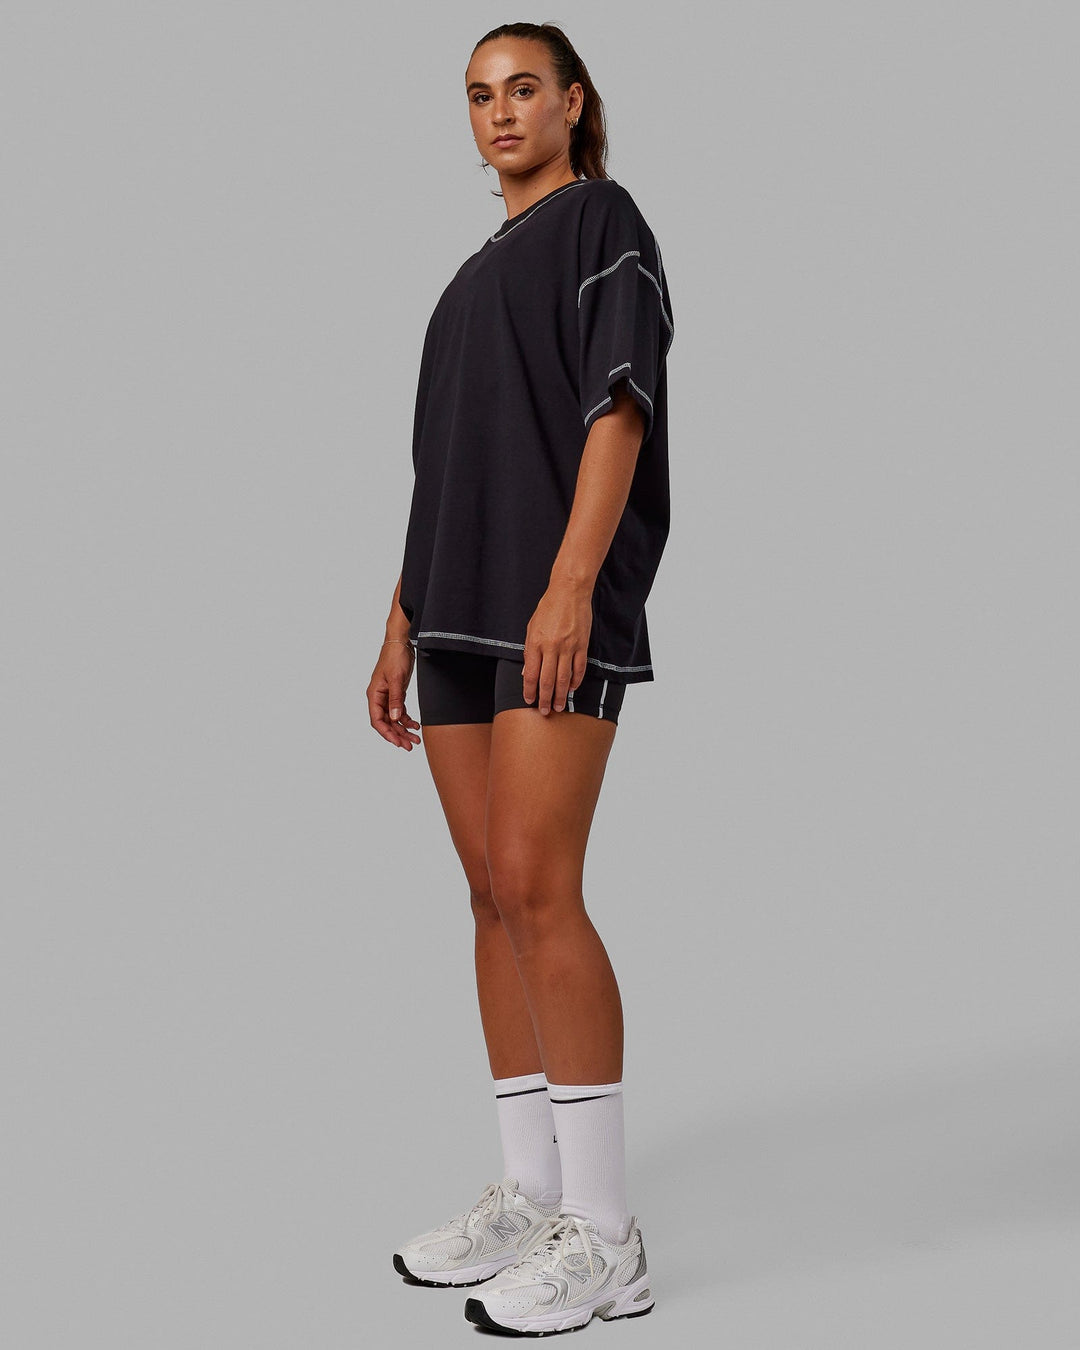 Woman wearing Unisex Overlock Ultra-Heavyweight Tee Oversize - Black-White